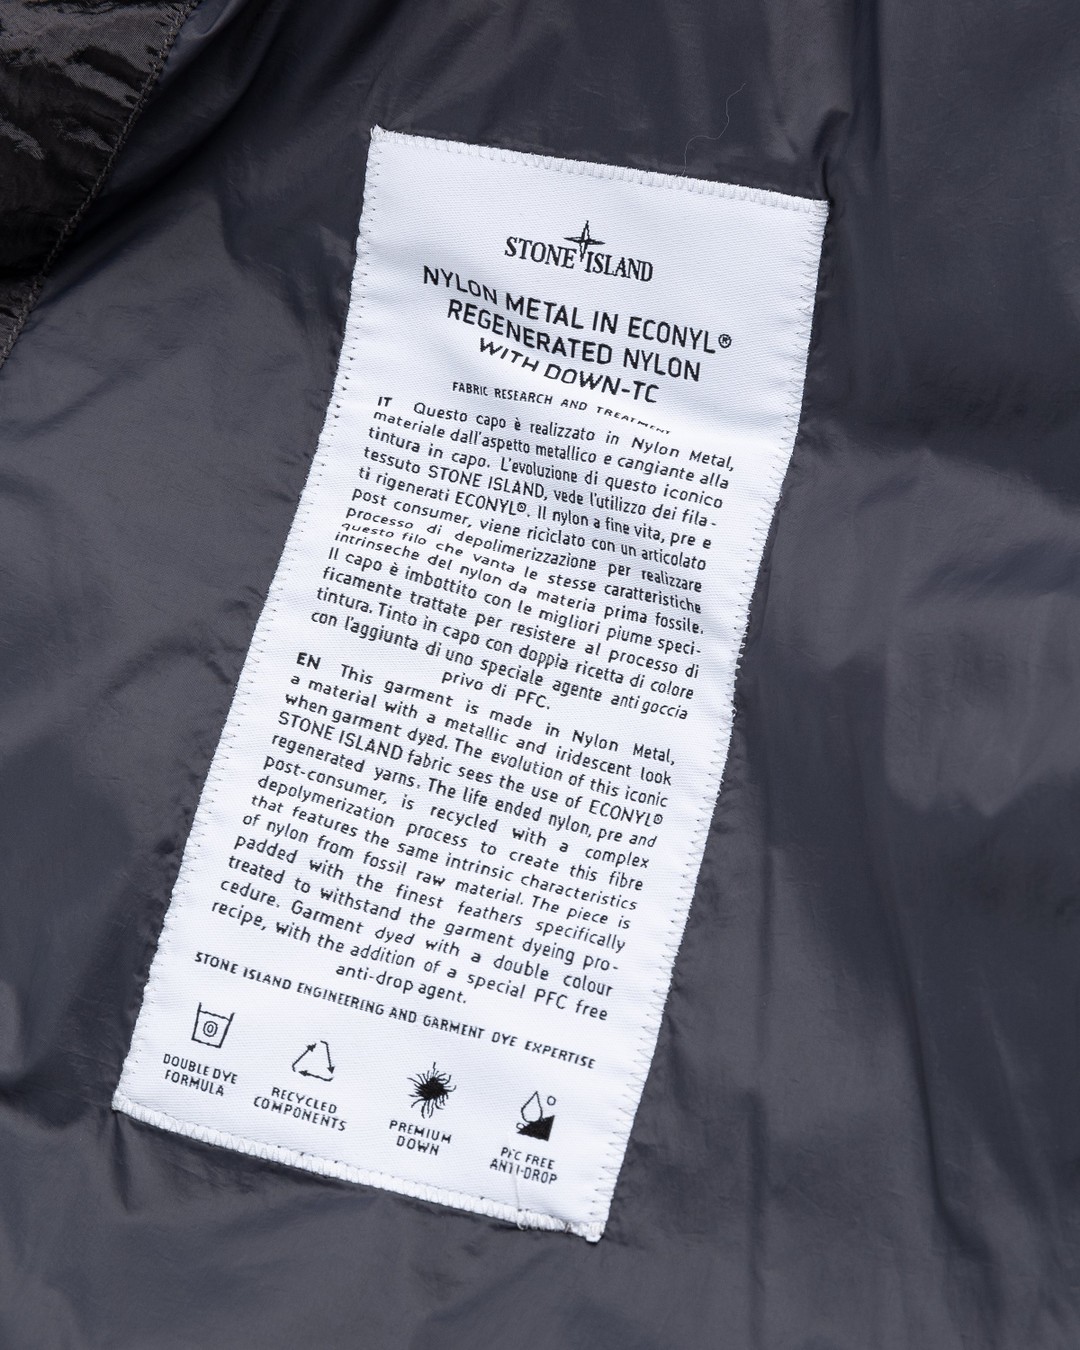 Stone Island – Nylon Metal Down Jacket Anrtacite - Outerwear - Black - Image 6